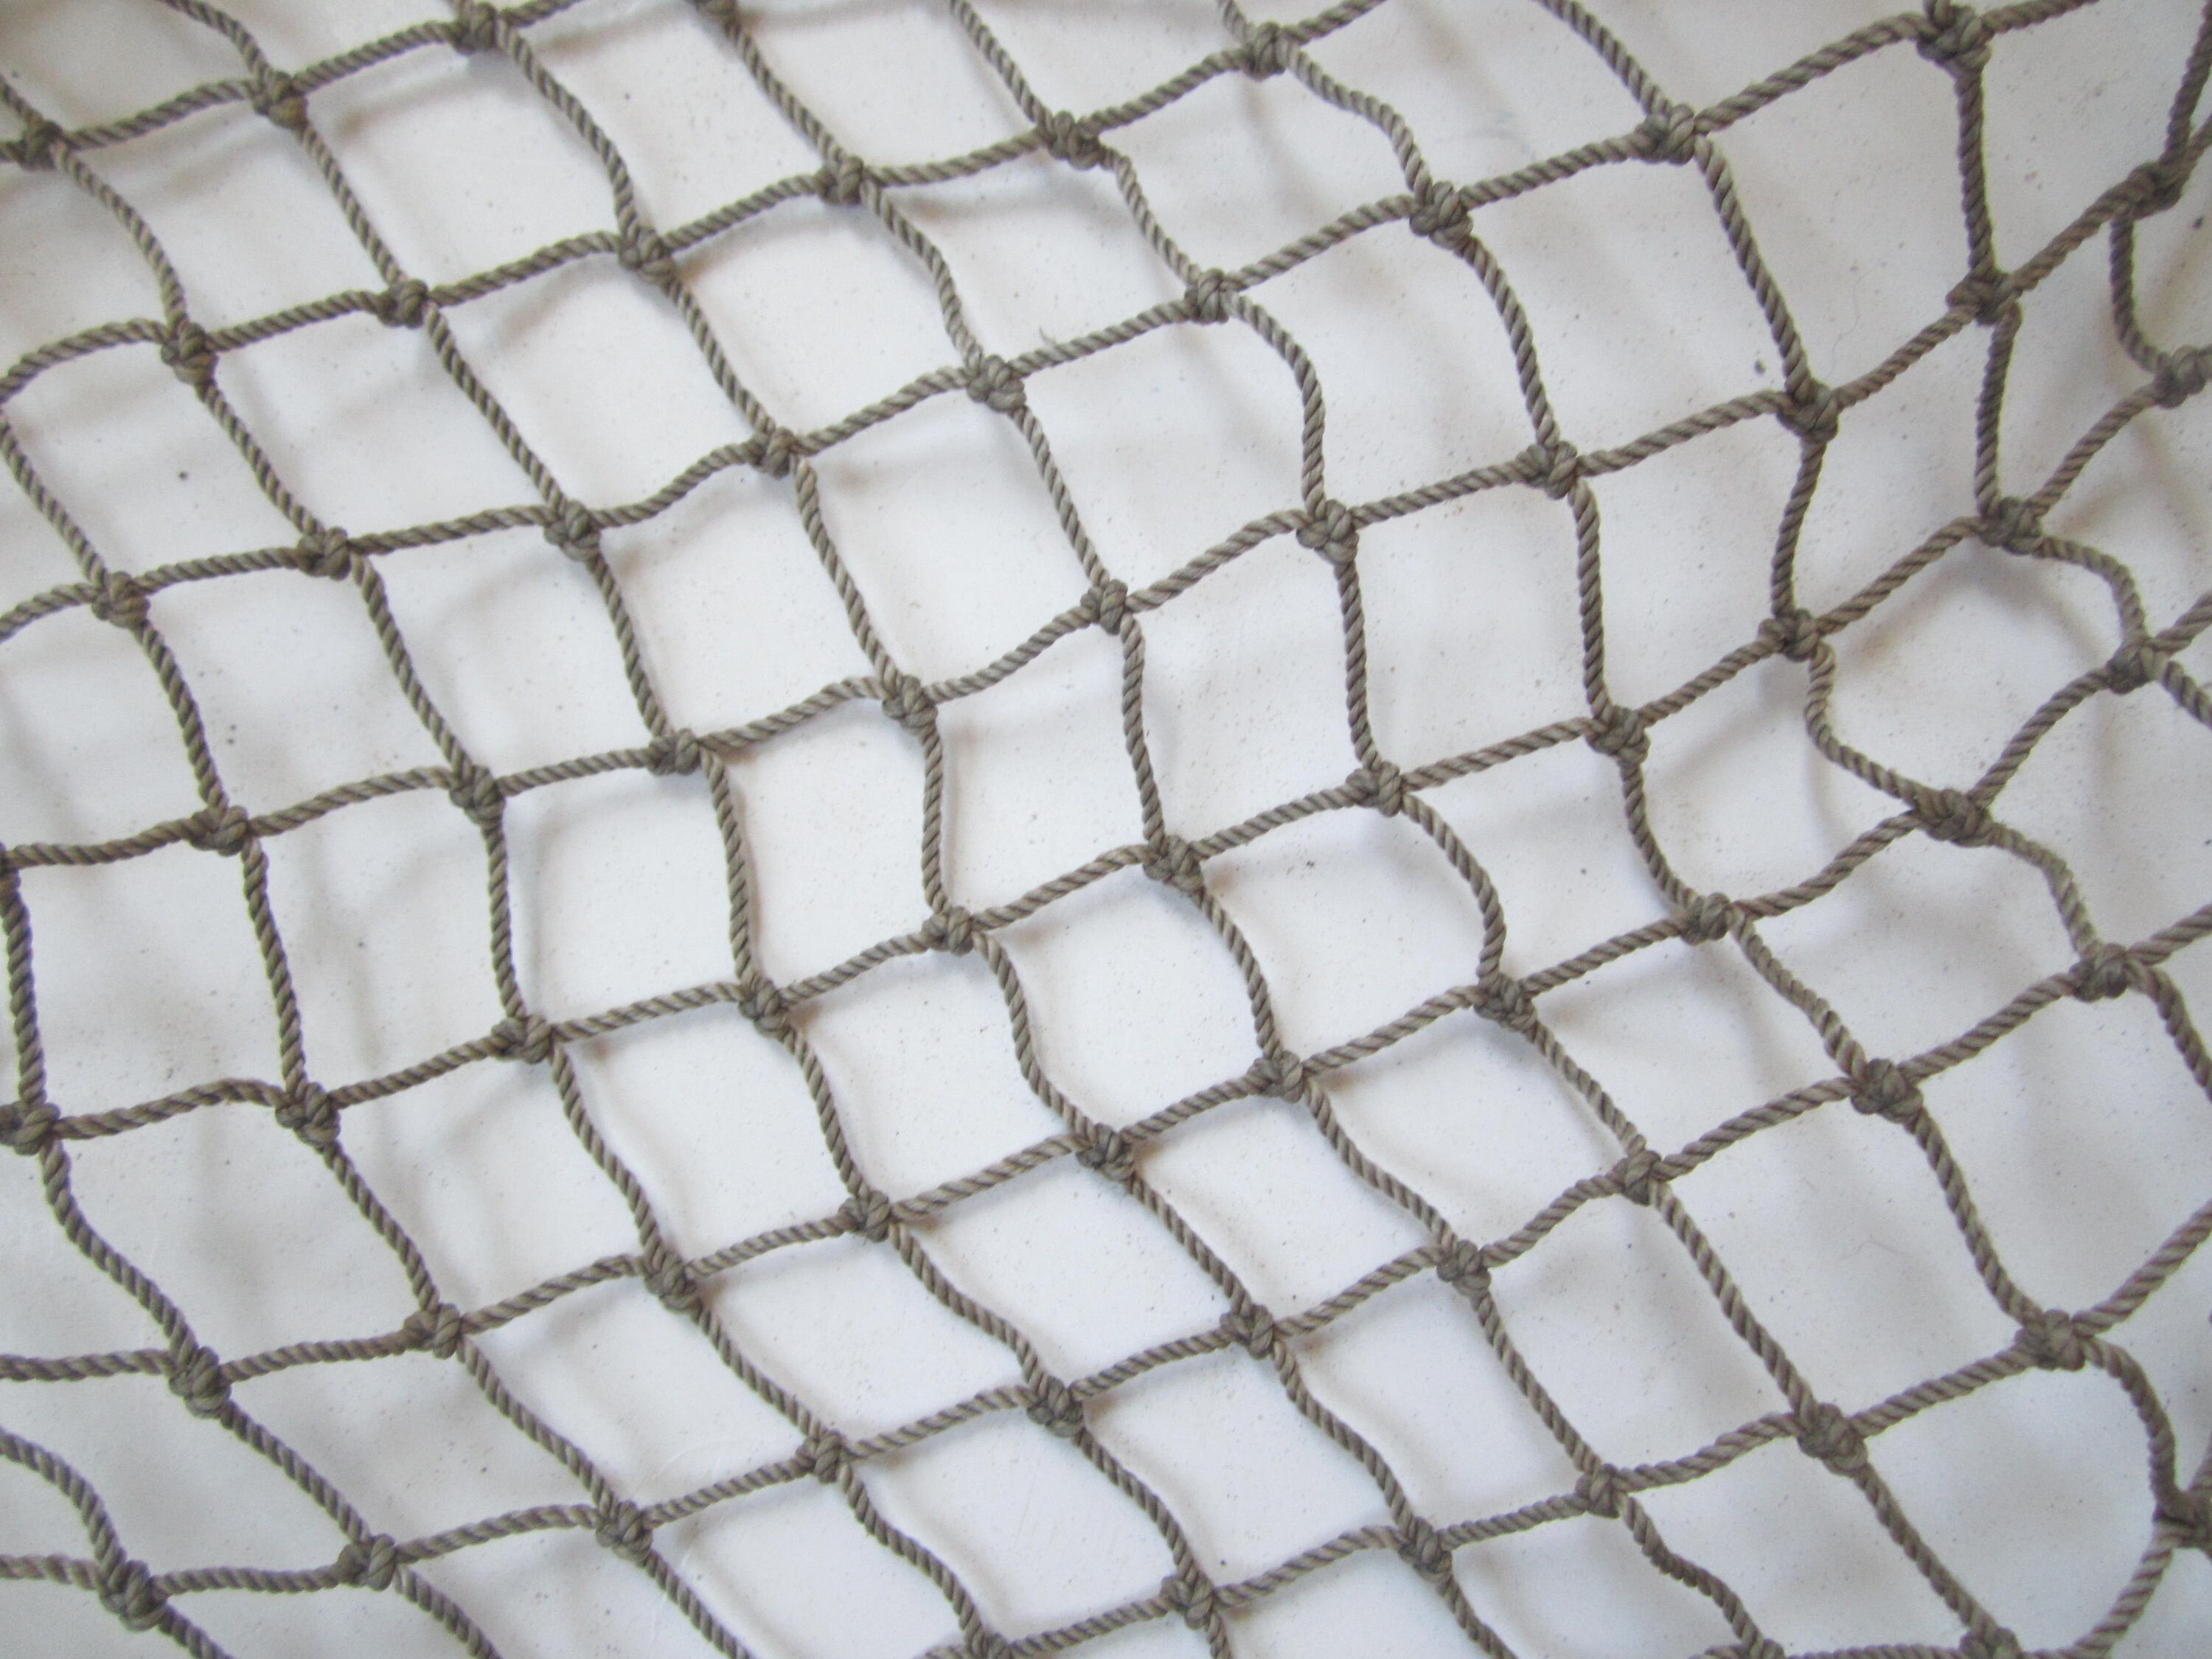 Fish Netting Display Rope Starfish Nautical  10' x 8' Details about   Authentic Fishing Net 